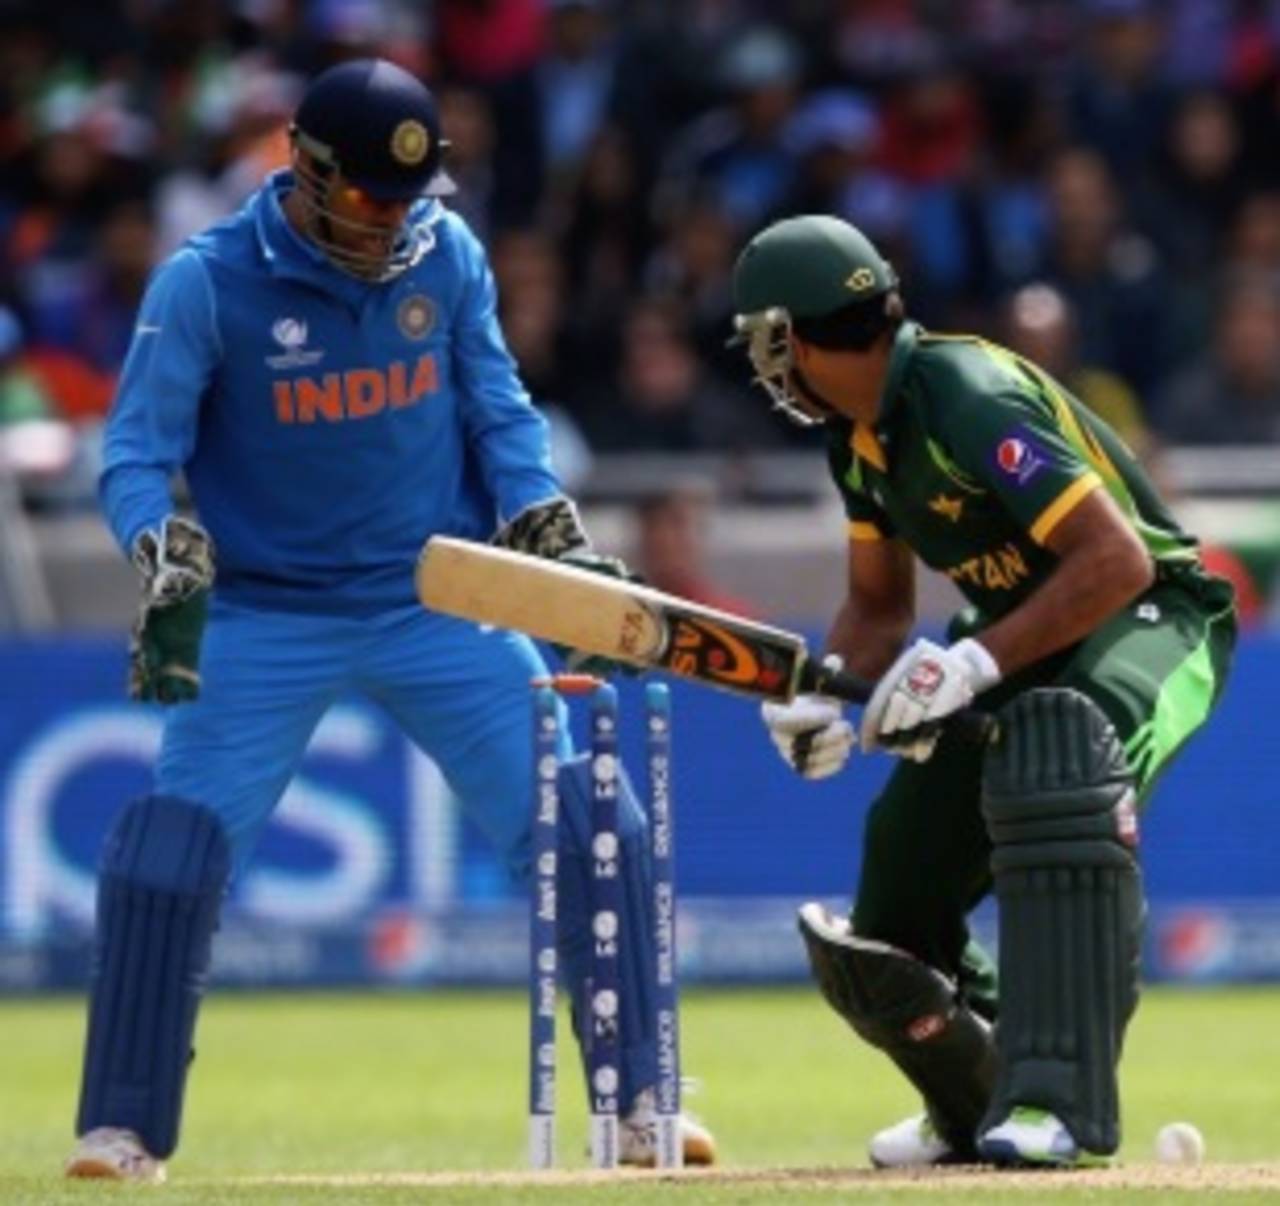 Misbah-ul-Haq was bowled for 22, India v Pakistan, Champions Trophy, Group B, Edgbaston, June 15, 2013